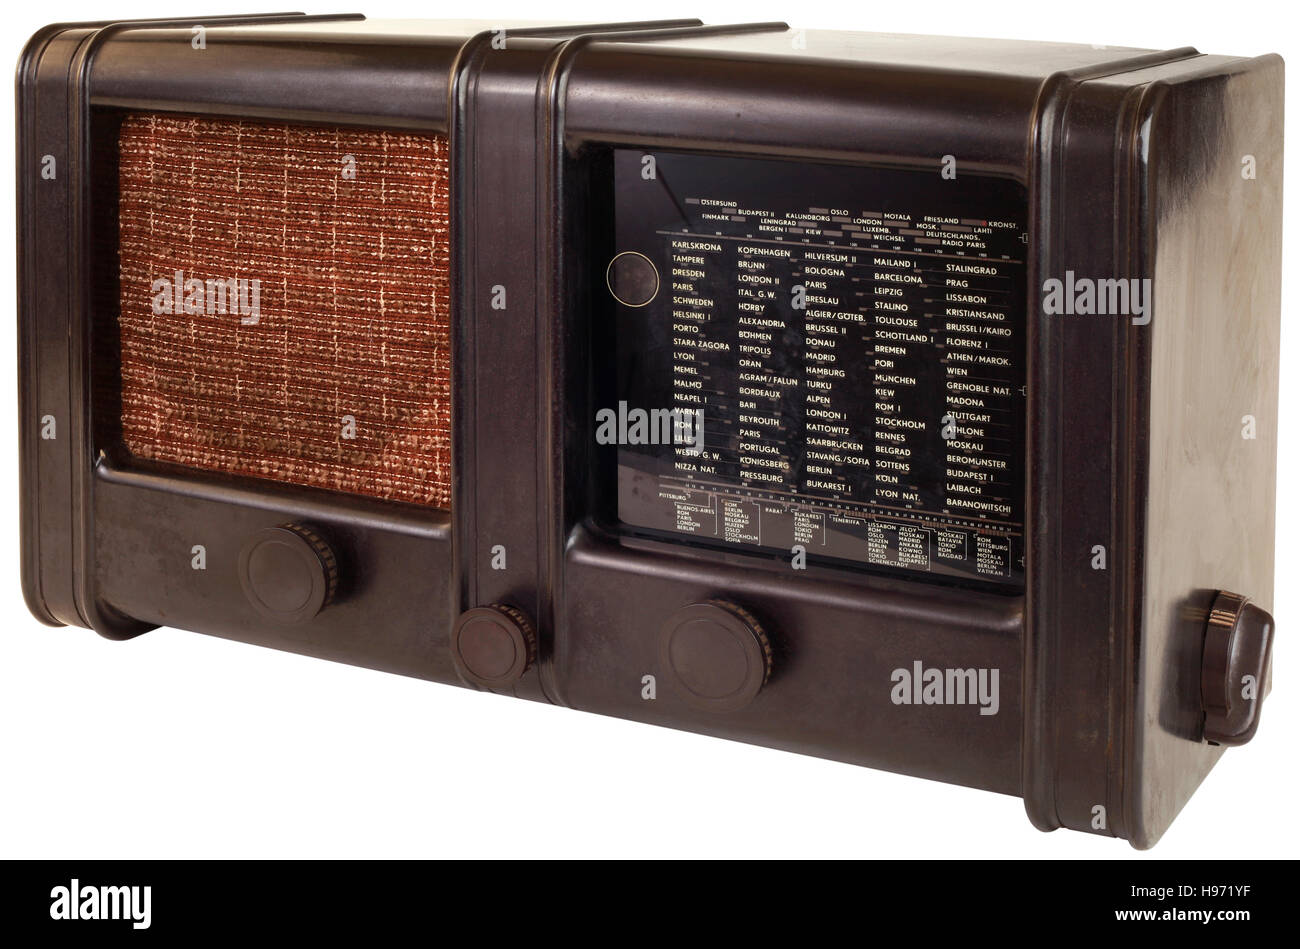 Радио аппарат начала 2000. Ари радио